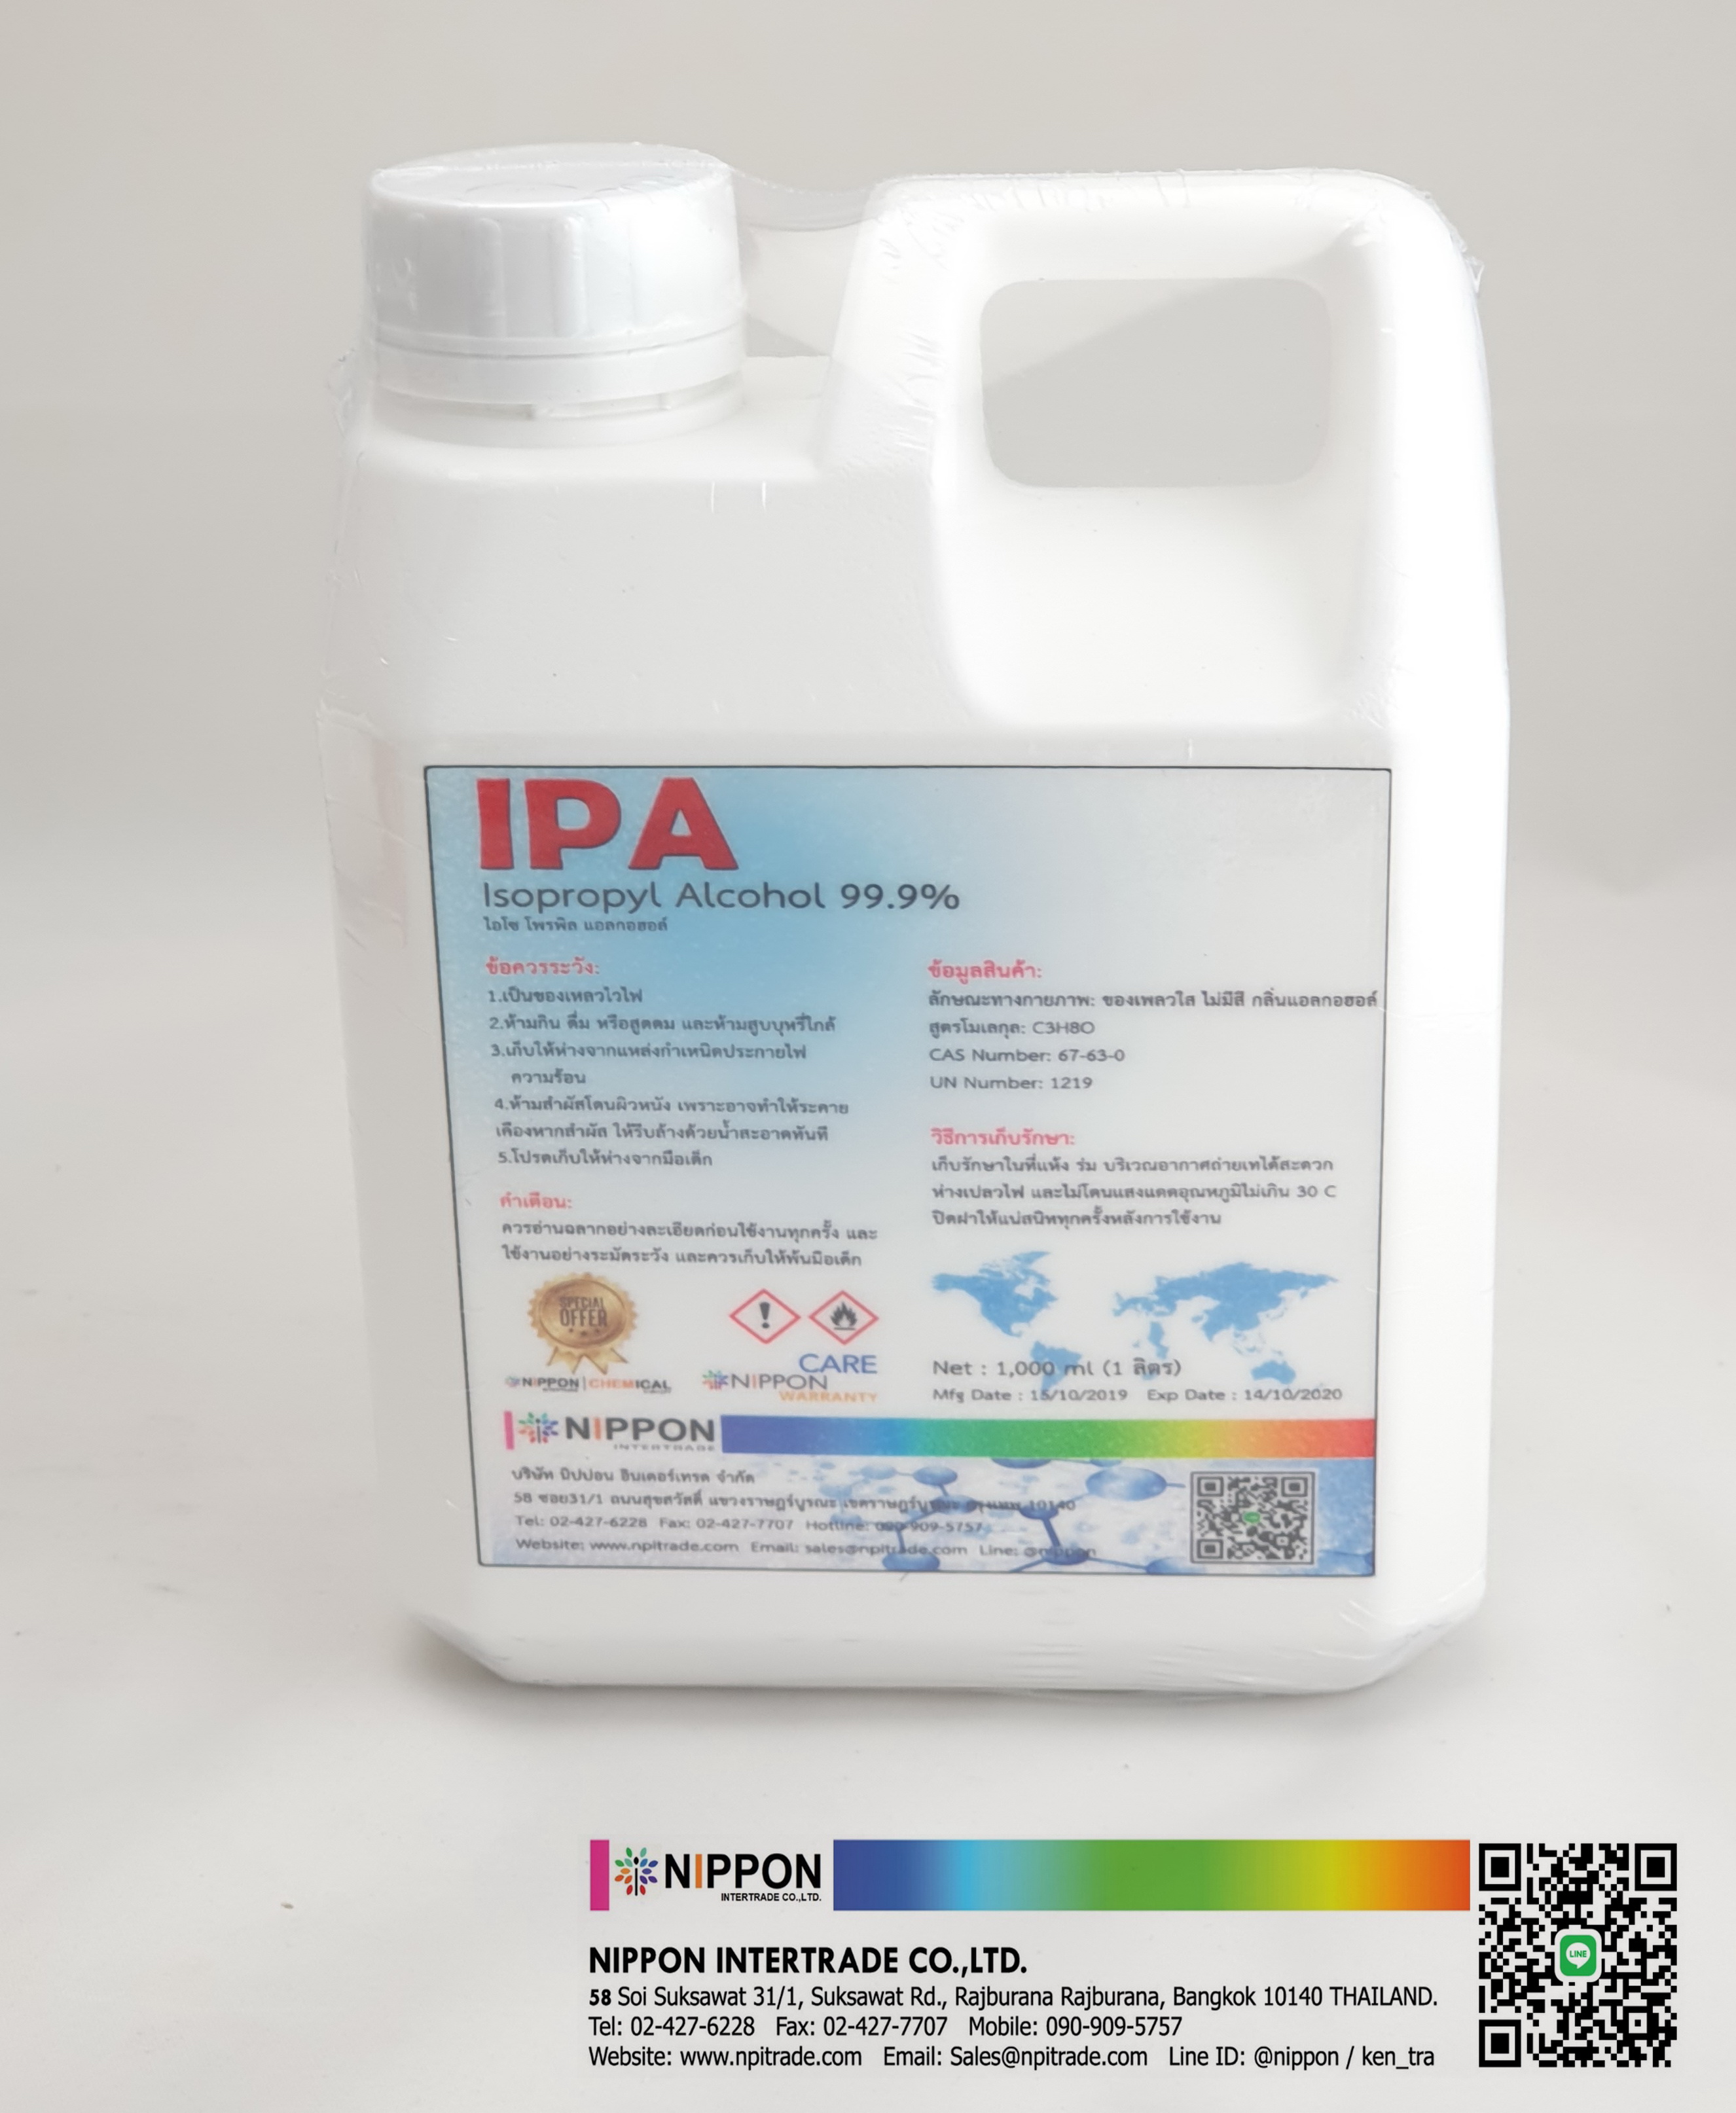 IPA (Isopropyl Alcohol) 99.9% (ขนาด 1 ลิตร) รับประกันเต็ม%